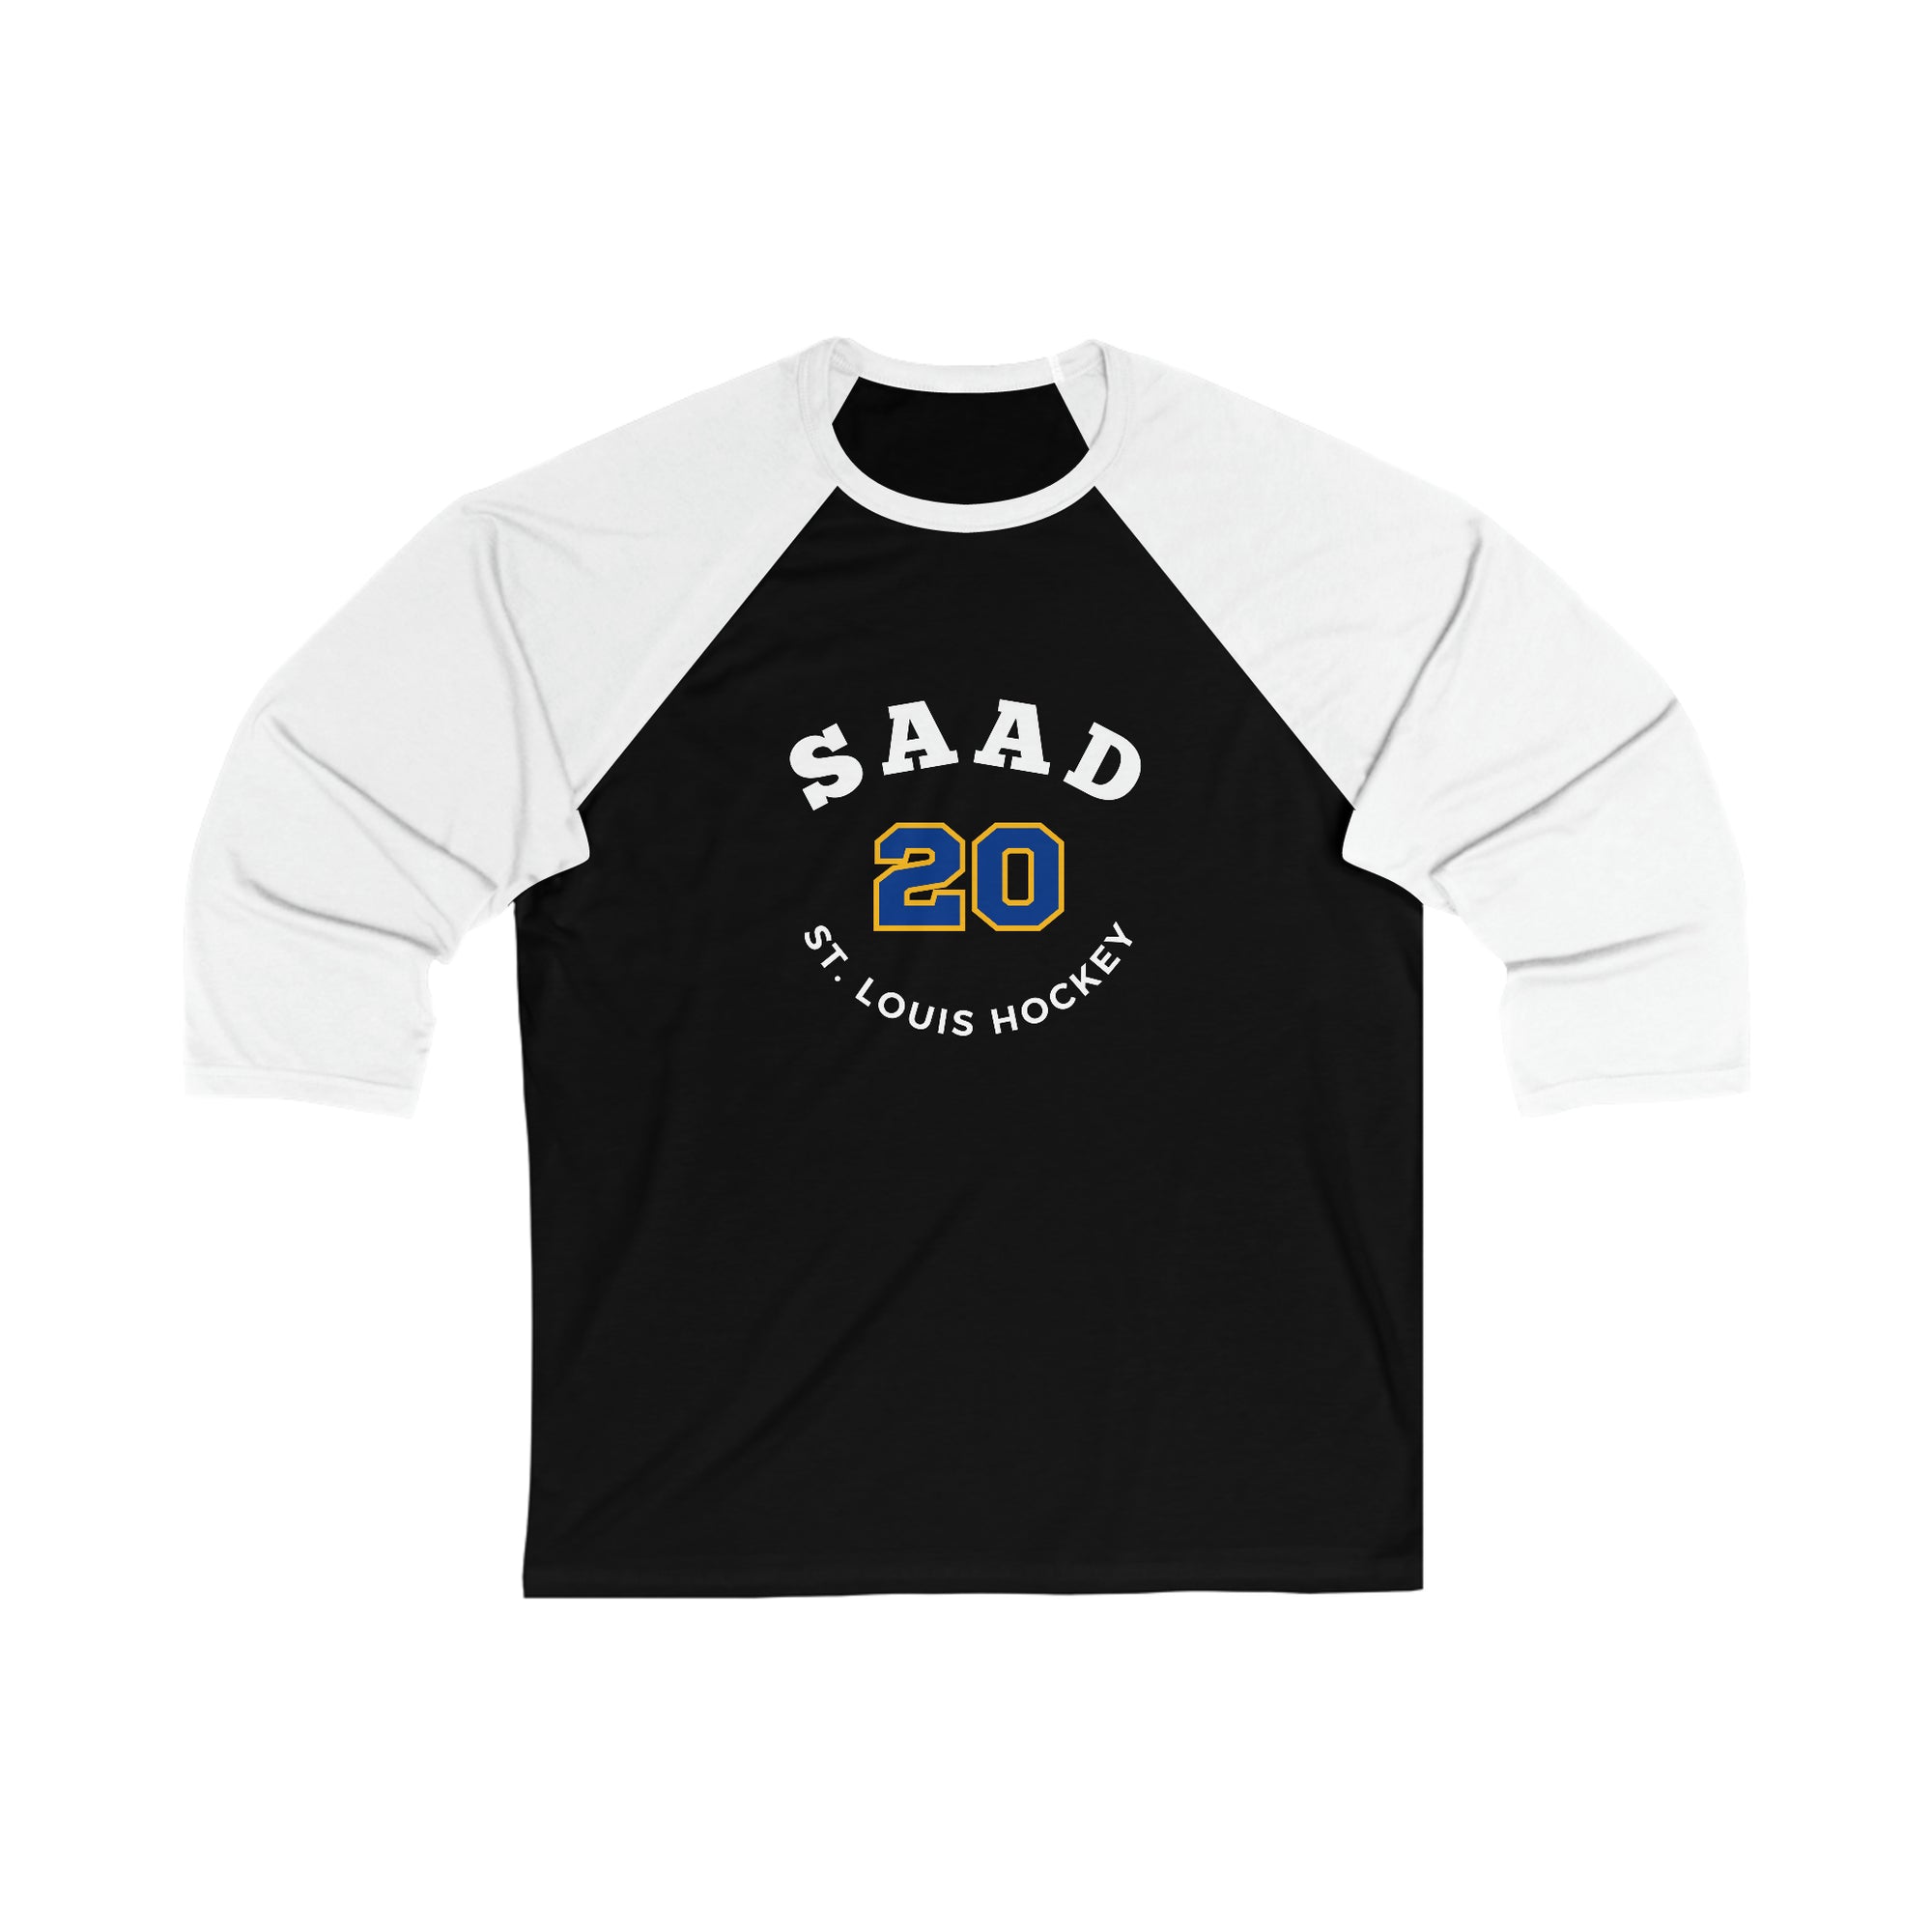 Saad 20 St. Louis Hockey Number Arch Design Unisex Tri-Blend 3/4 Sleeve Raglan Baseball Shirt